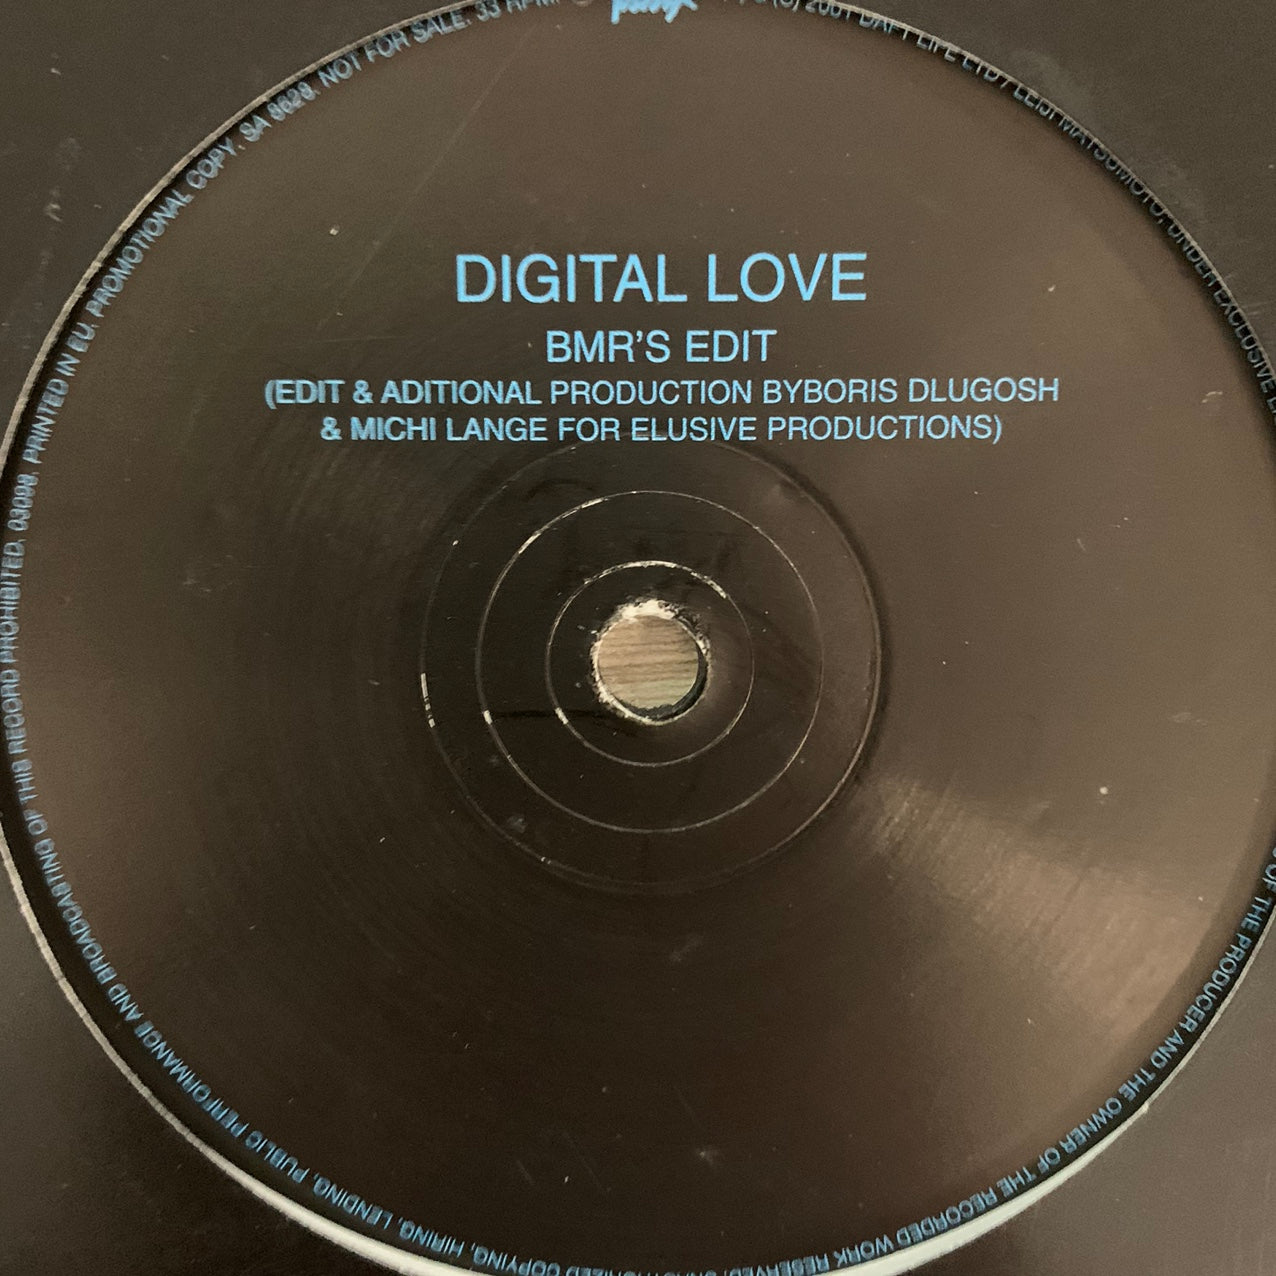 Daft Punk “Digital Love” BMR’s re edit single sided 12inch vinyl